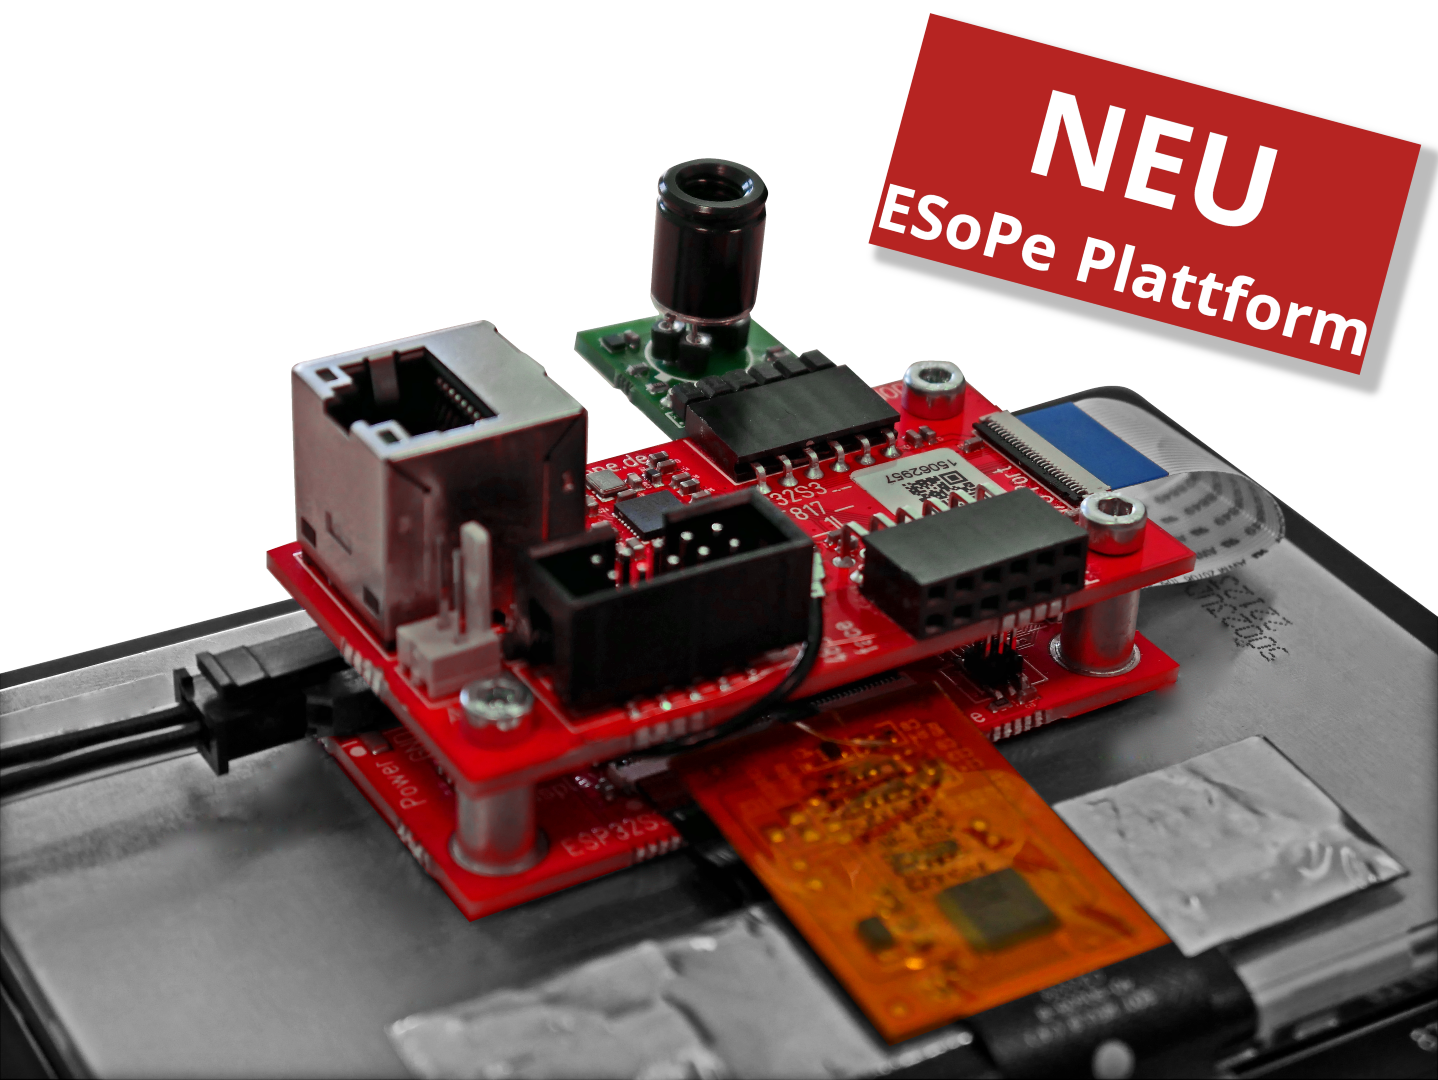 ESoPe-Plattform: ESP32-Evaluationboards